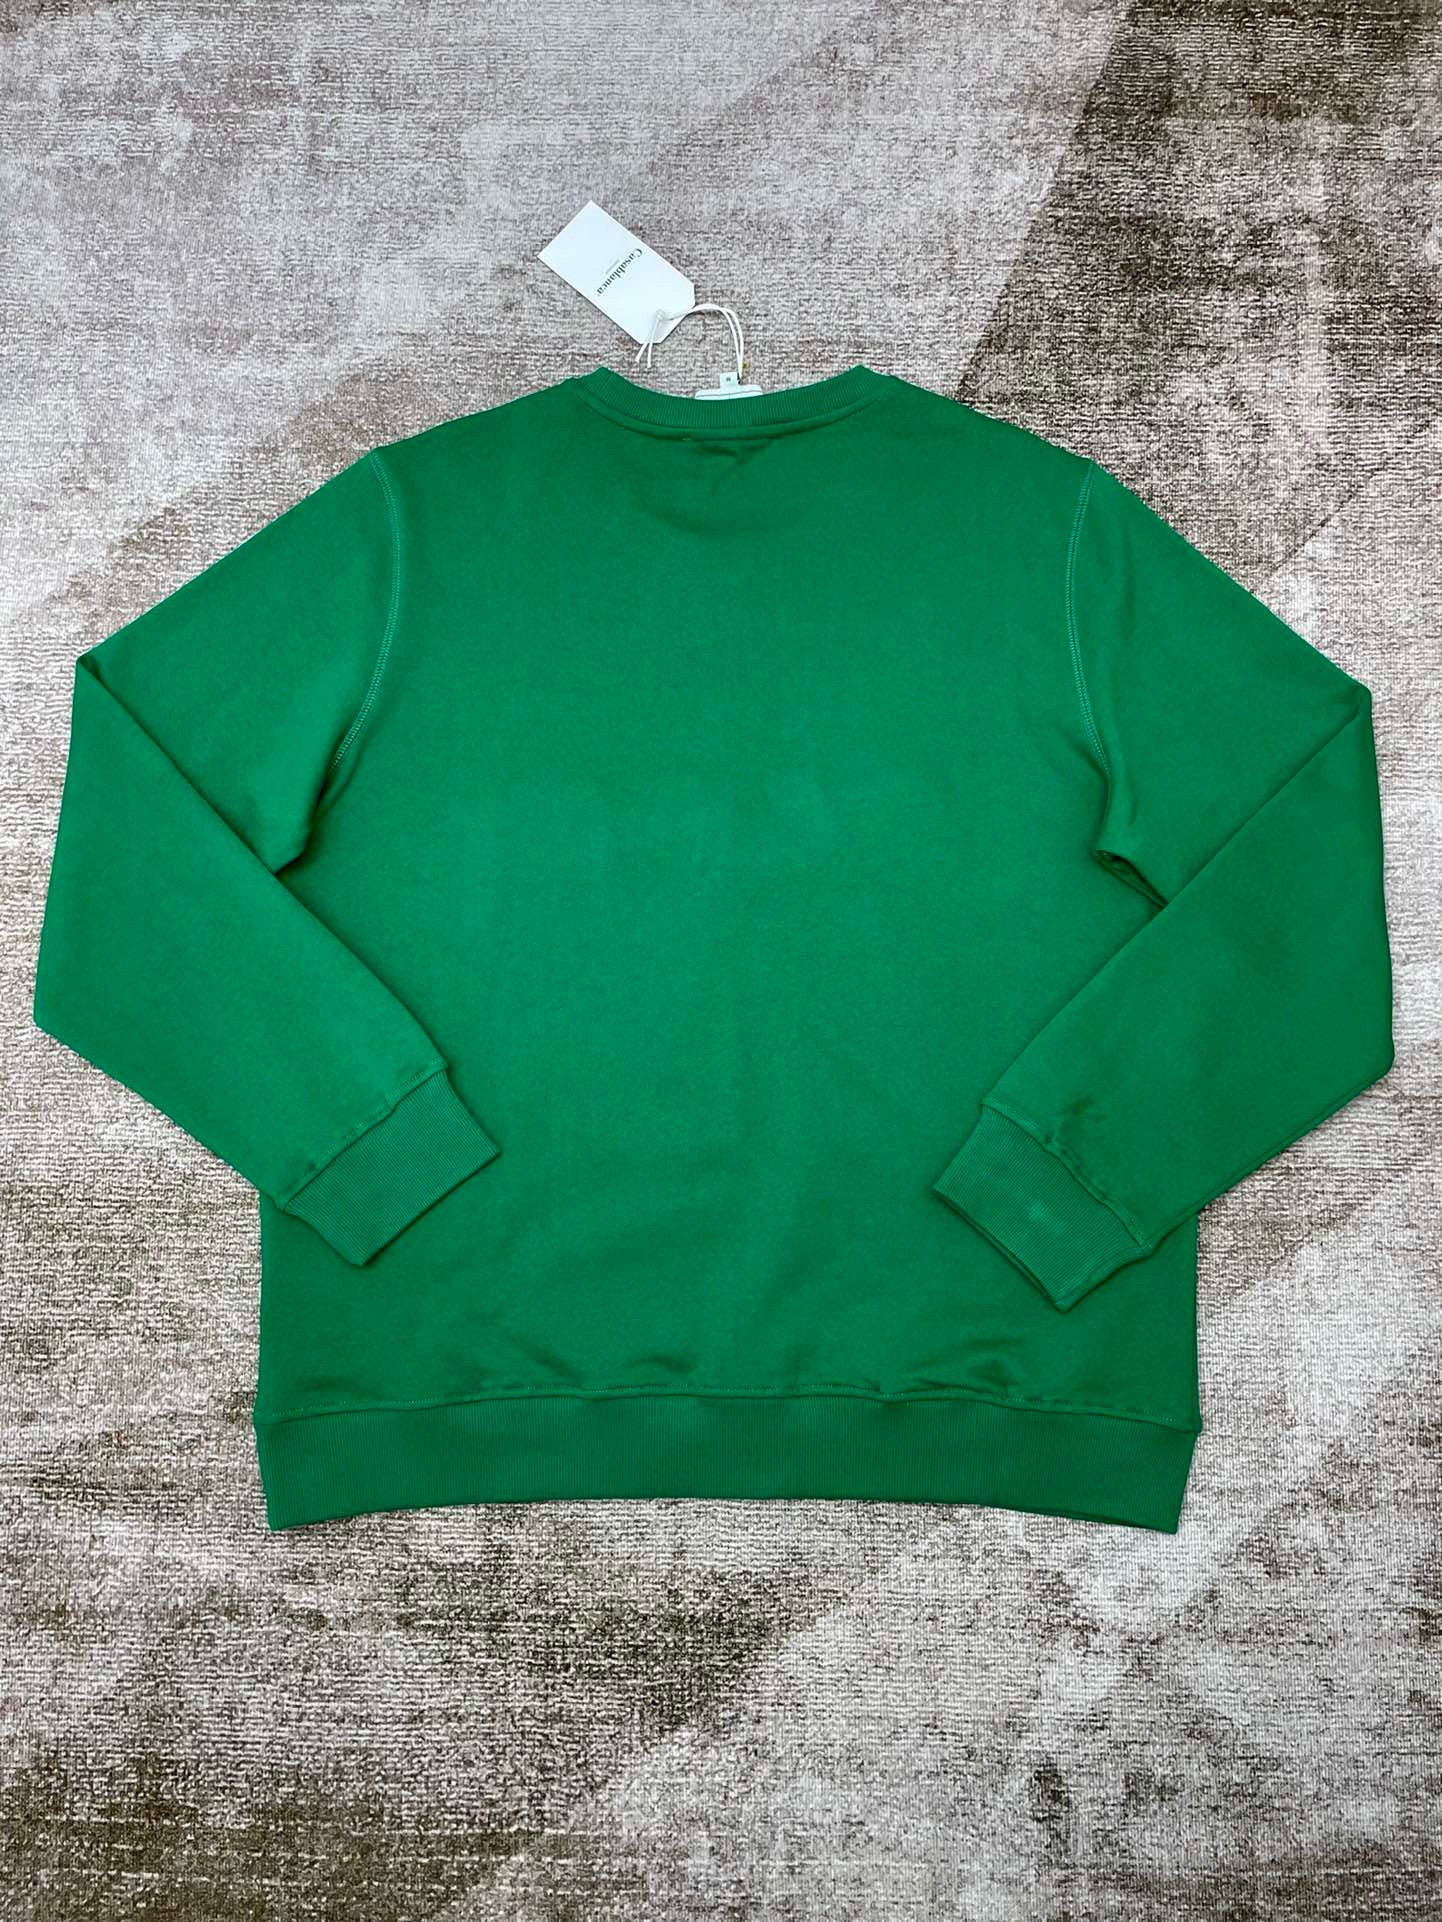 Green and Black Sweatshirt